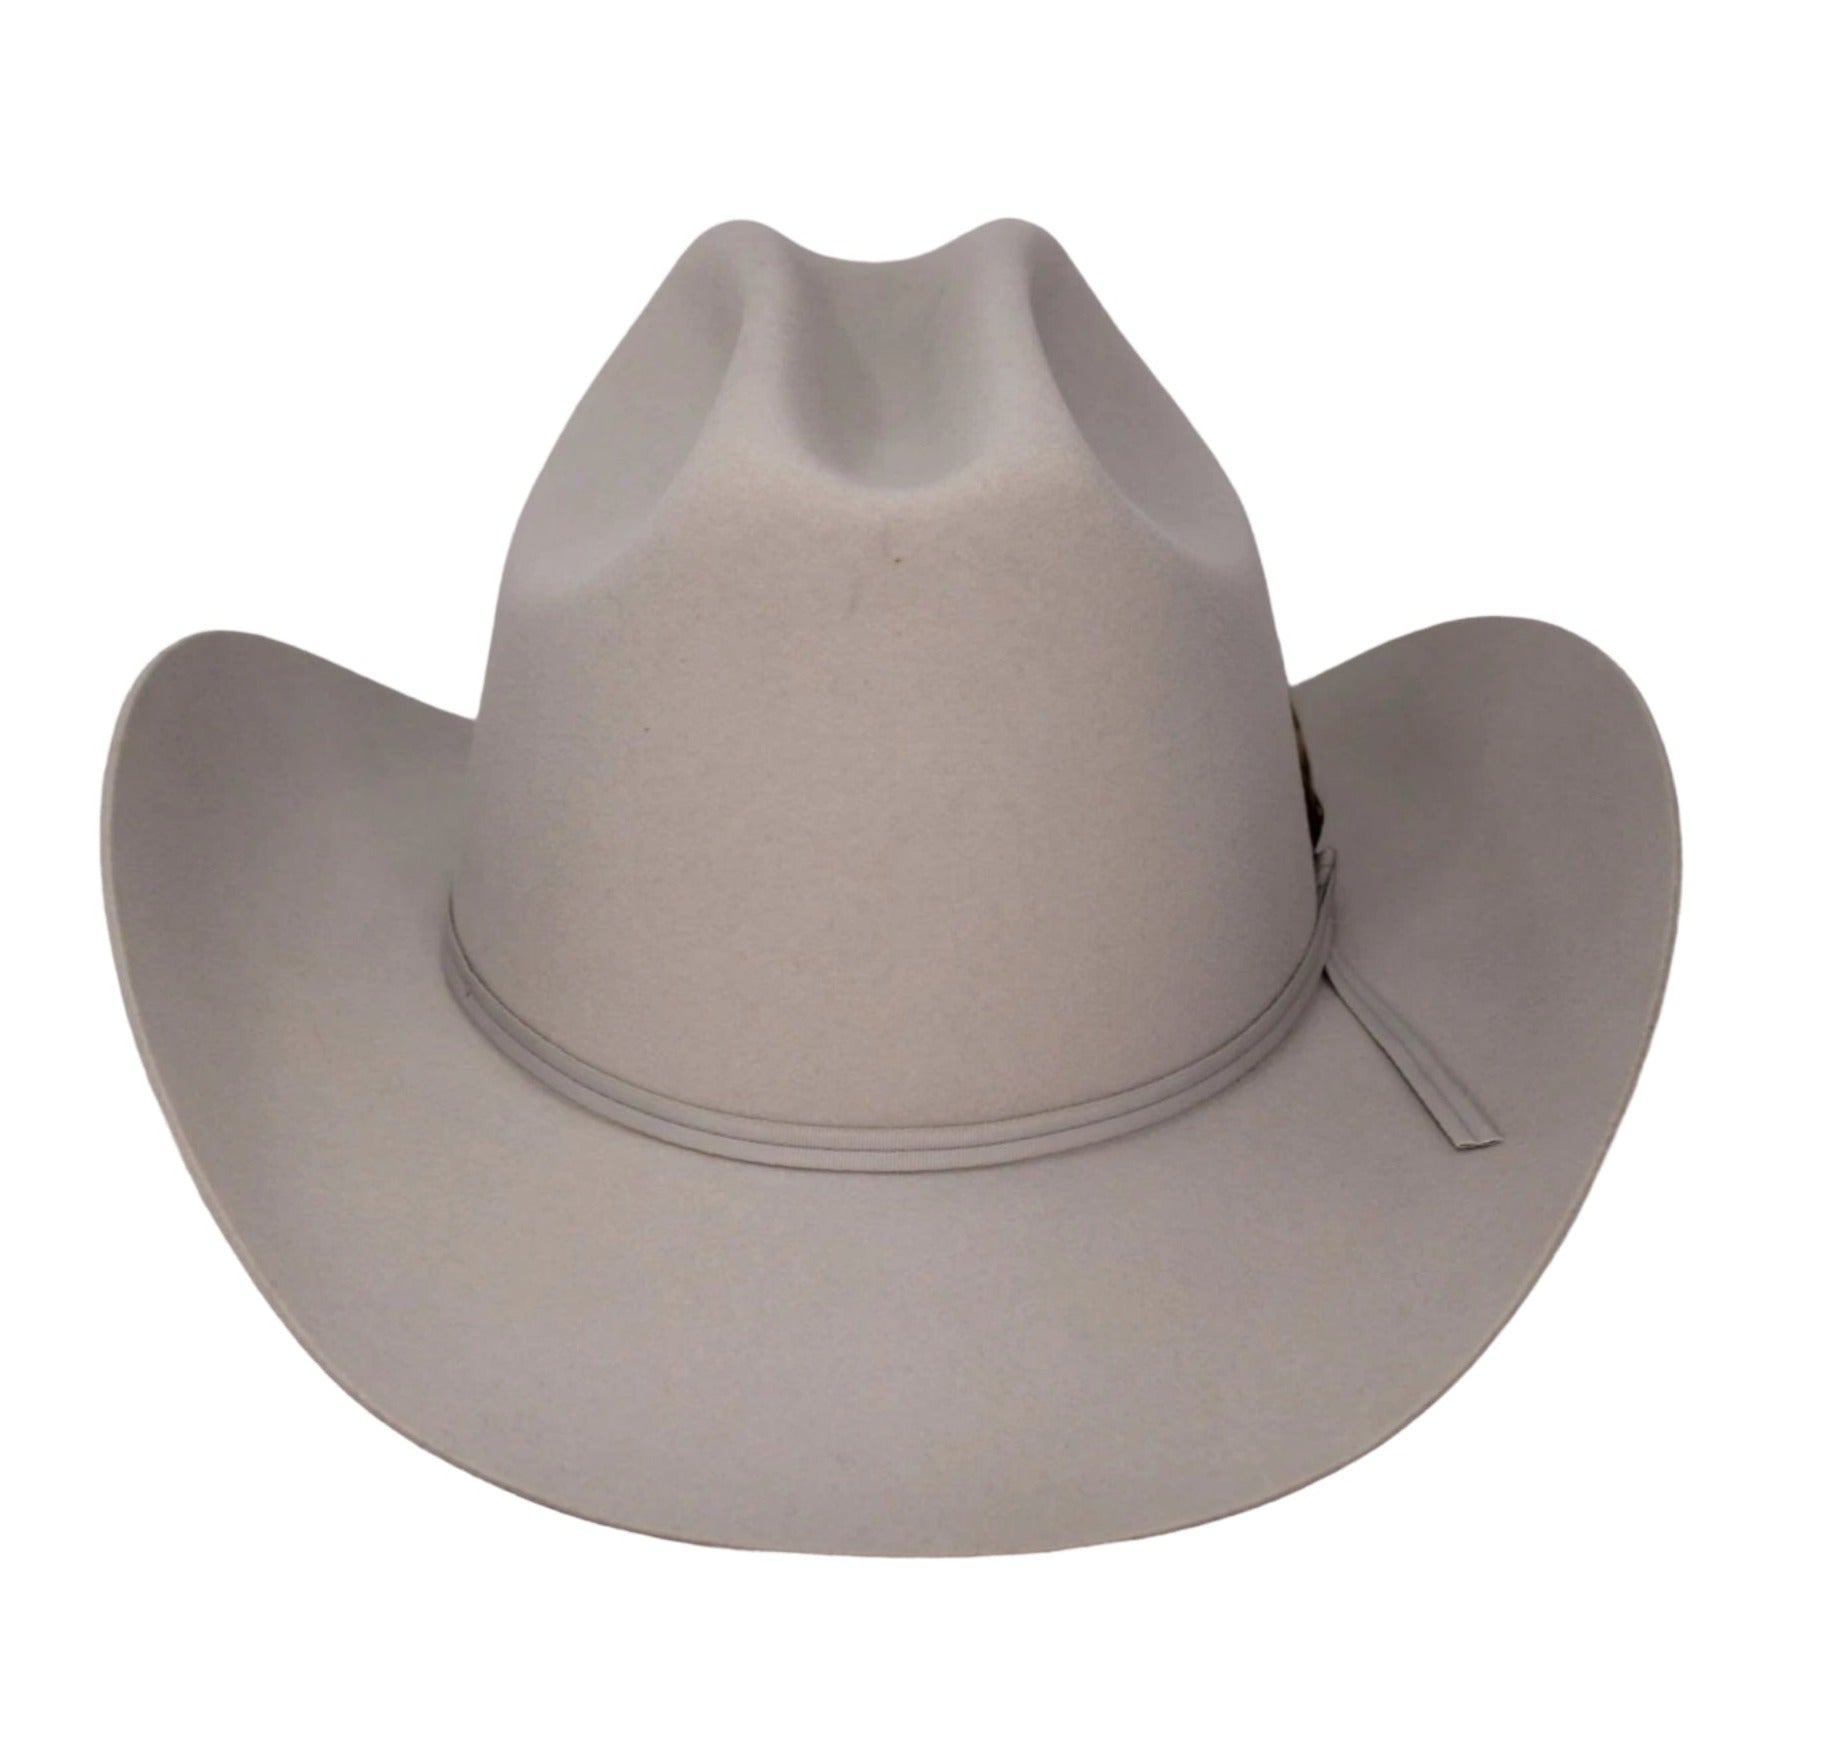 Wyoming Felt Feather Cowboy Hat